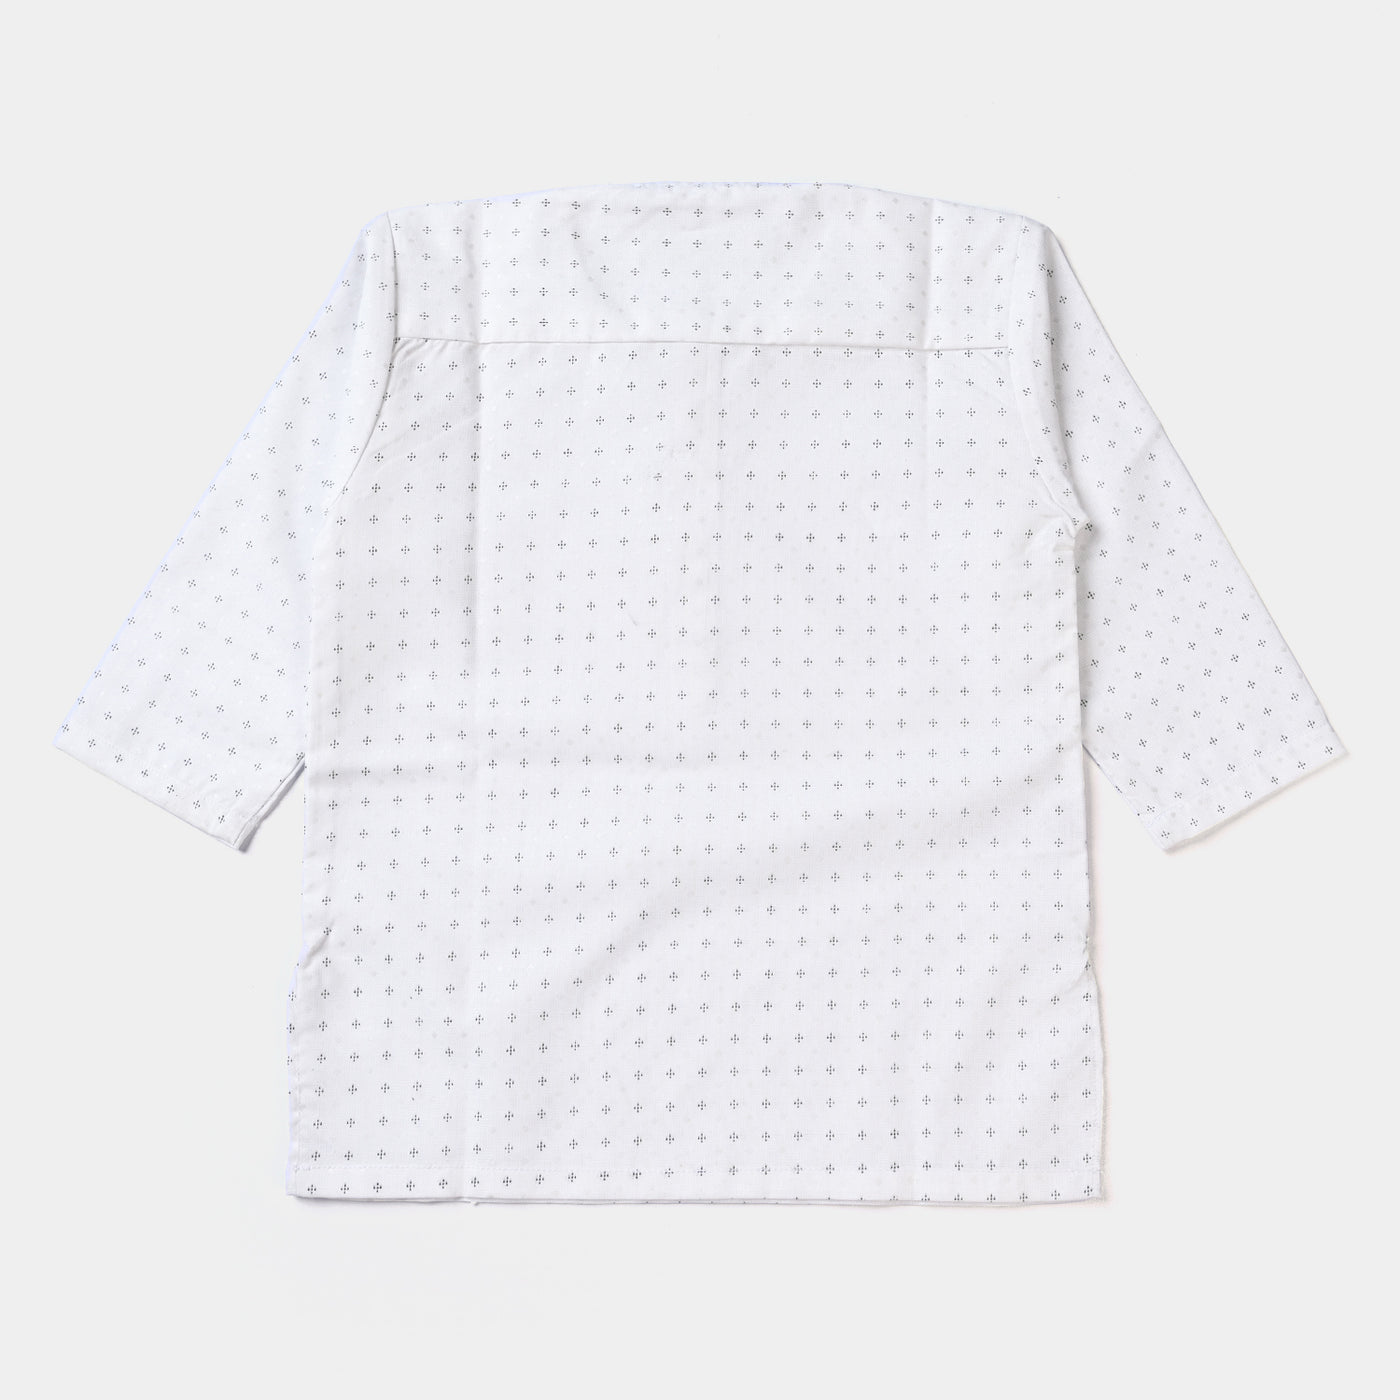 Infant Boys Poly Viscose Basic Suit (Dots) | White